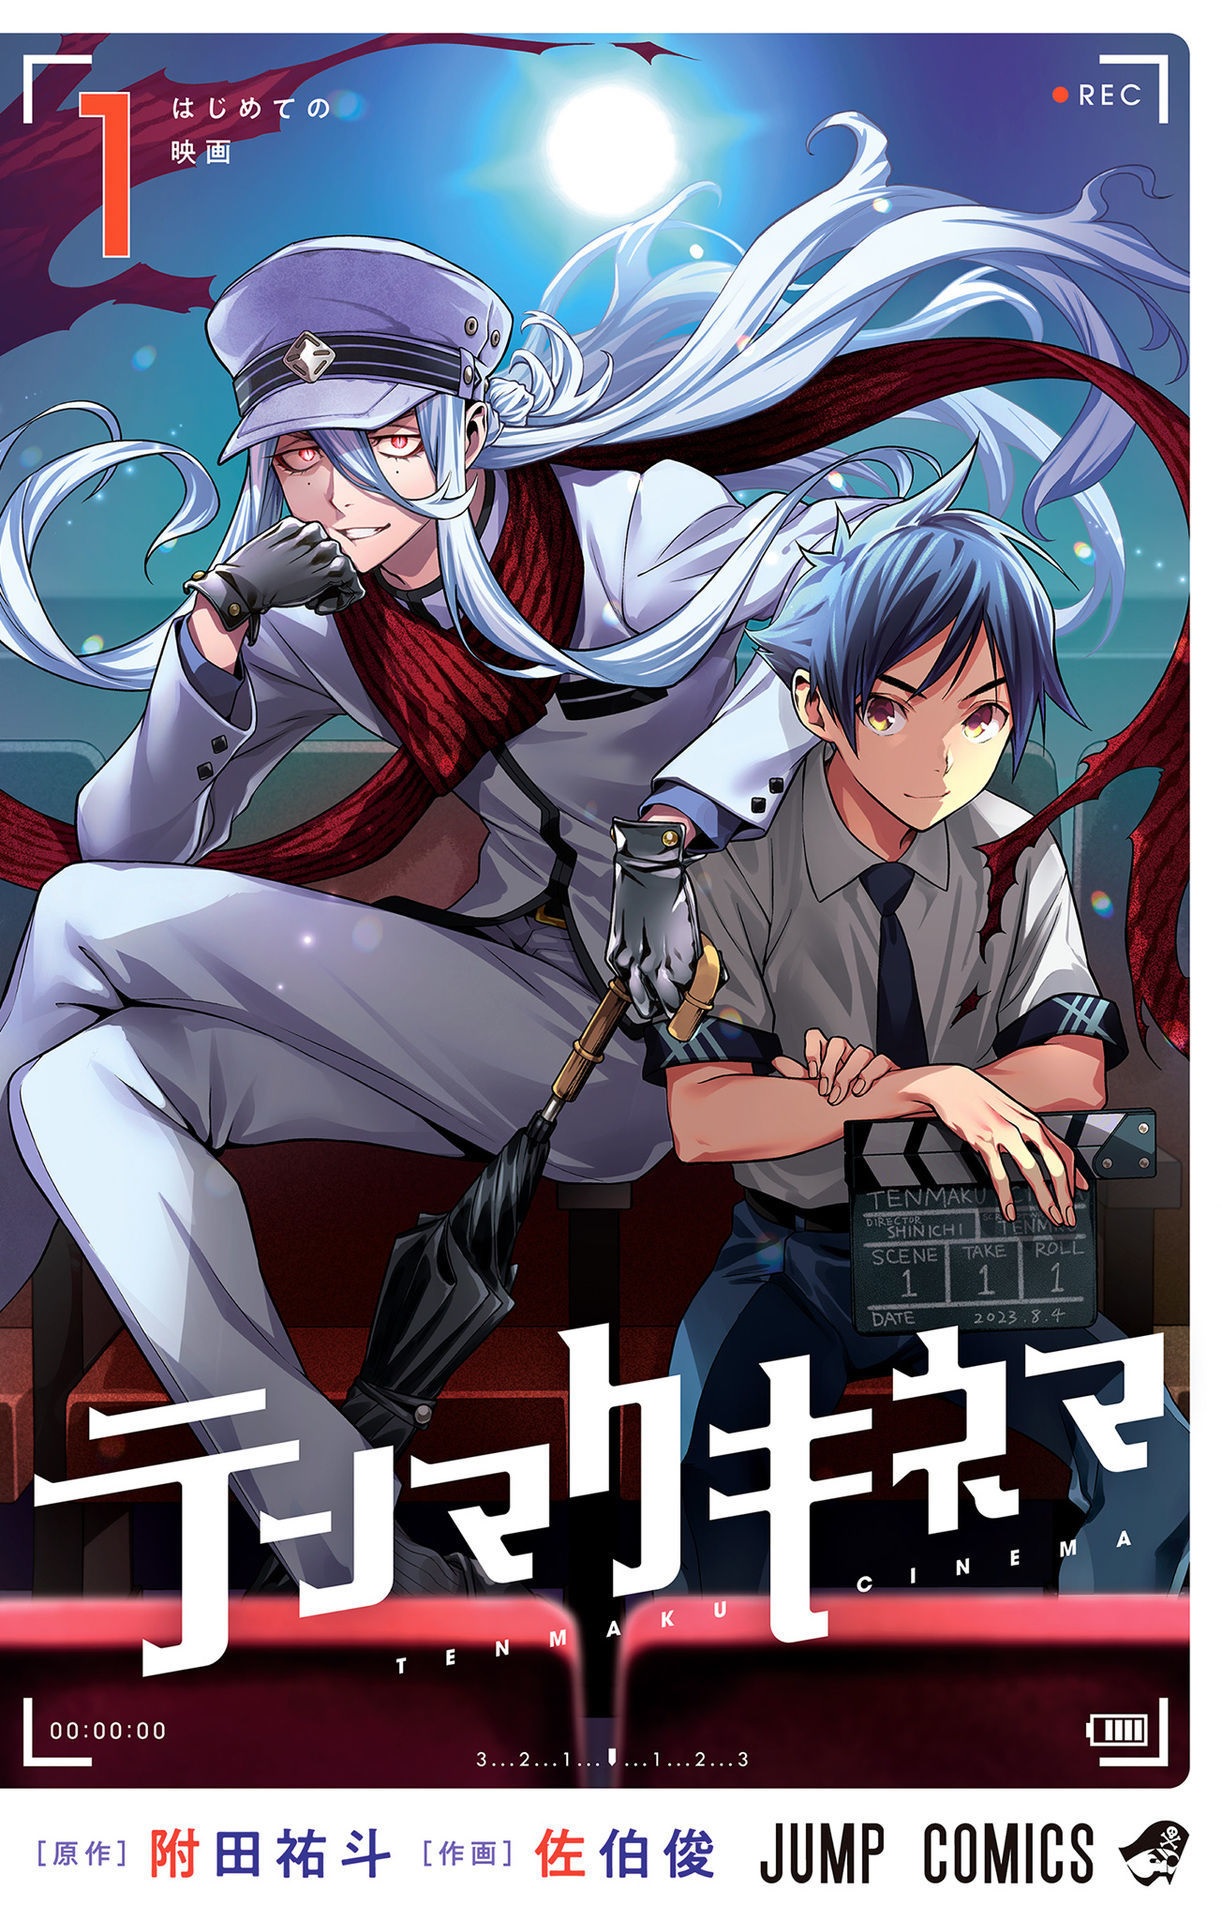 Episodes 1-2 - Sasaki and Miyano - Anime News Network